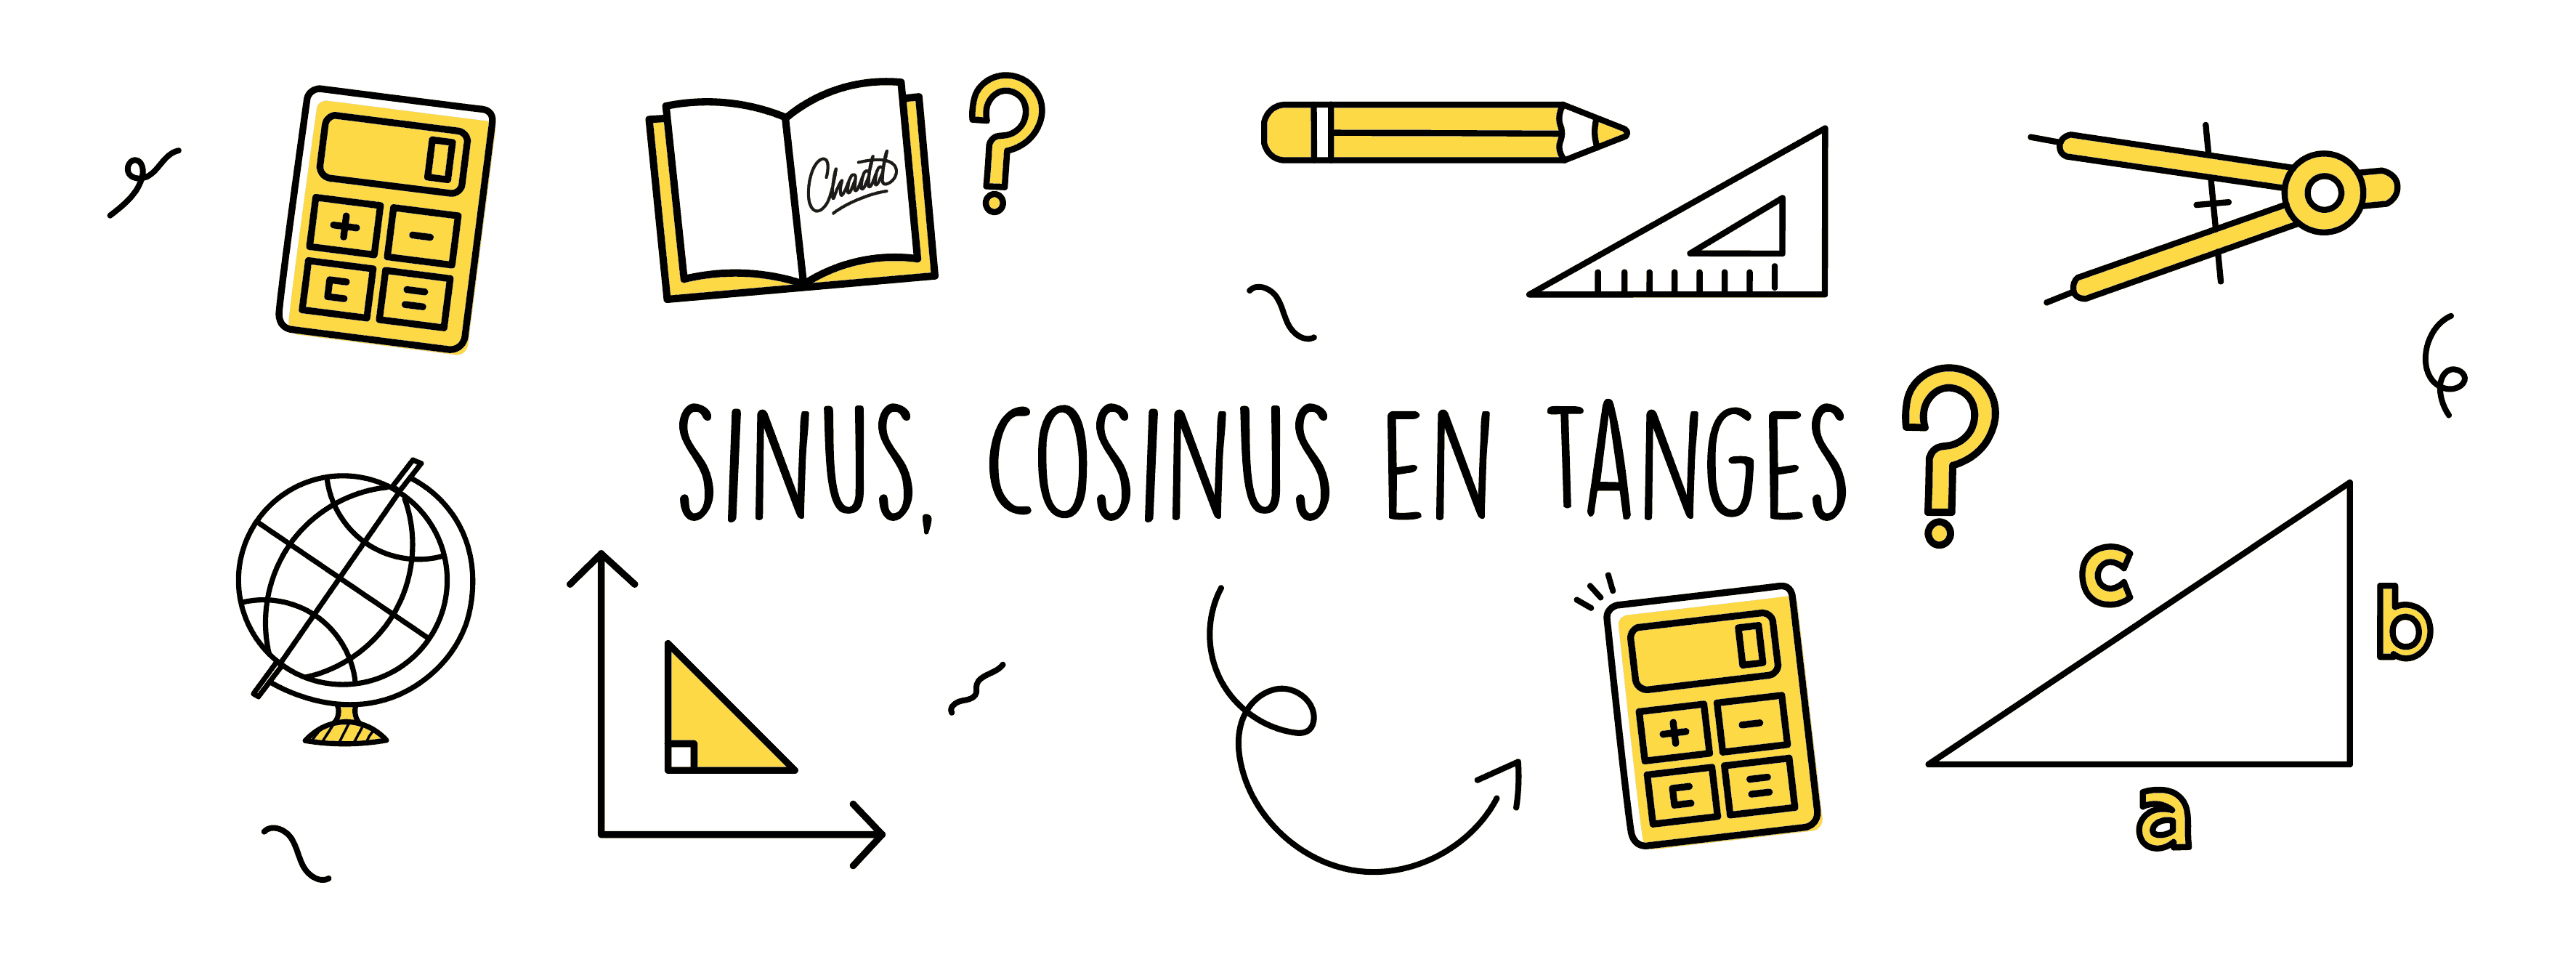 Sinus,cosinus en tangens